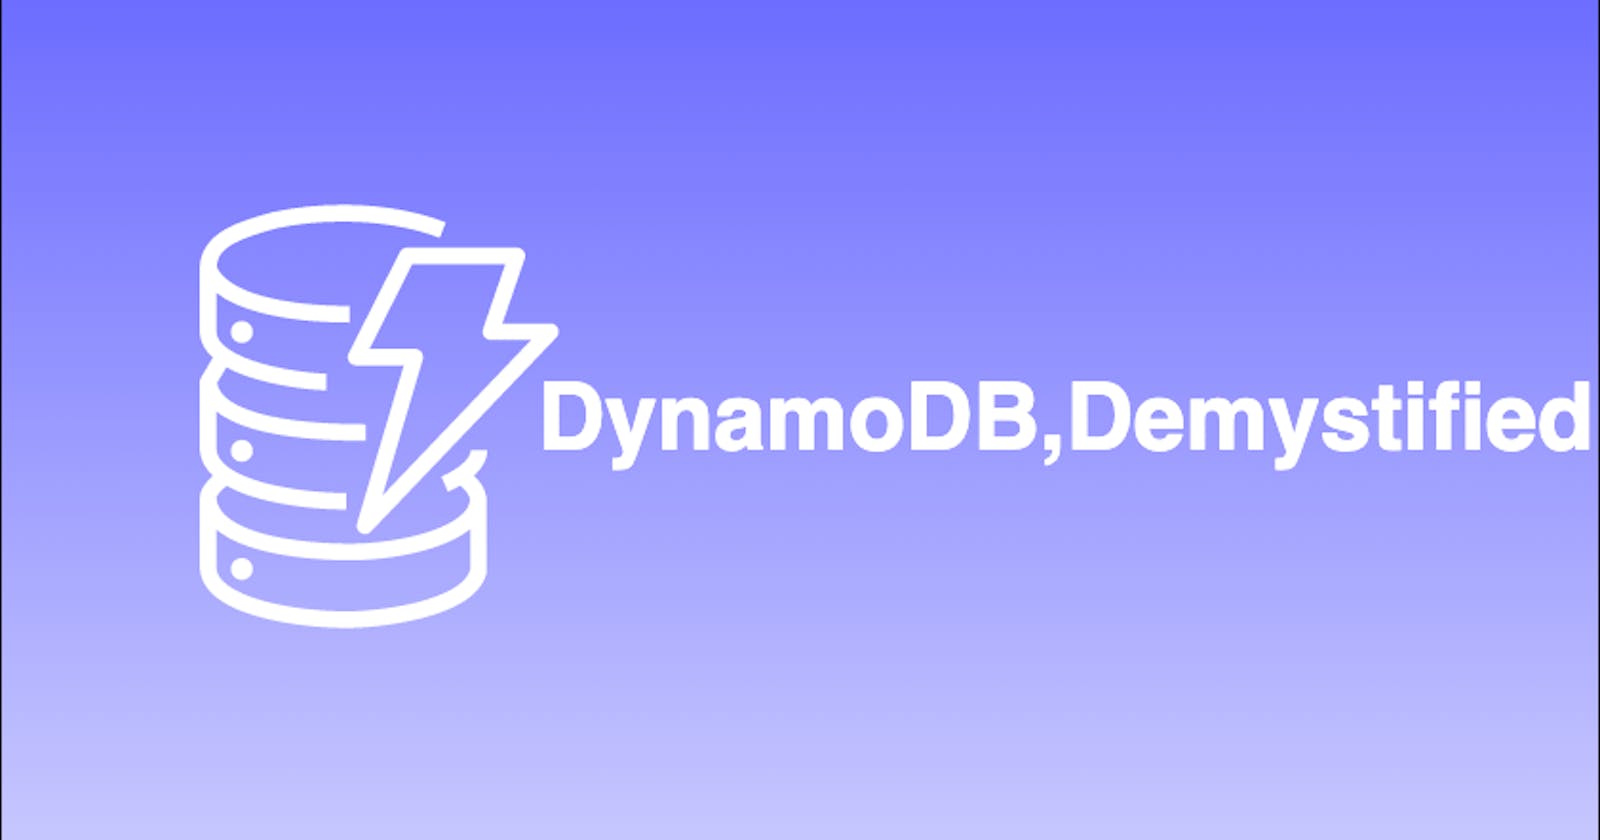 DynamoDB, Demistyfied
(Chapter 2)